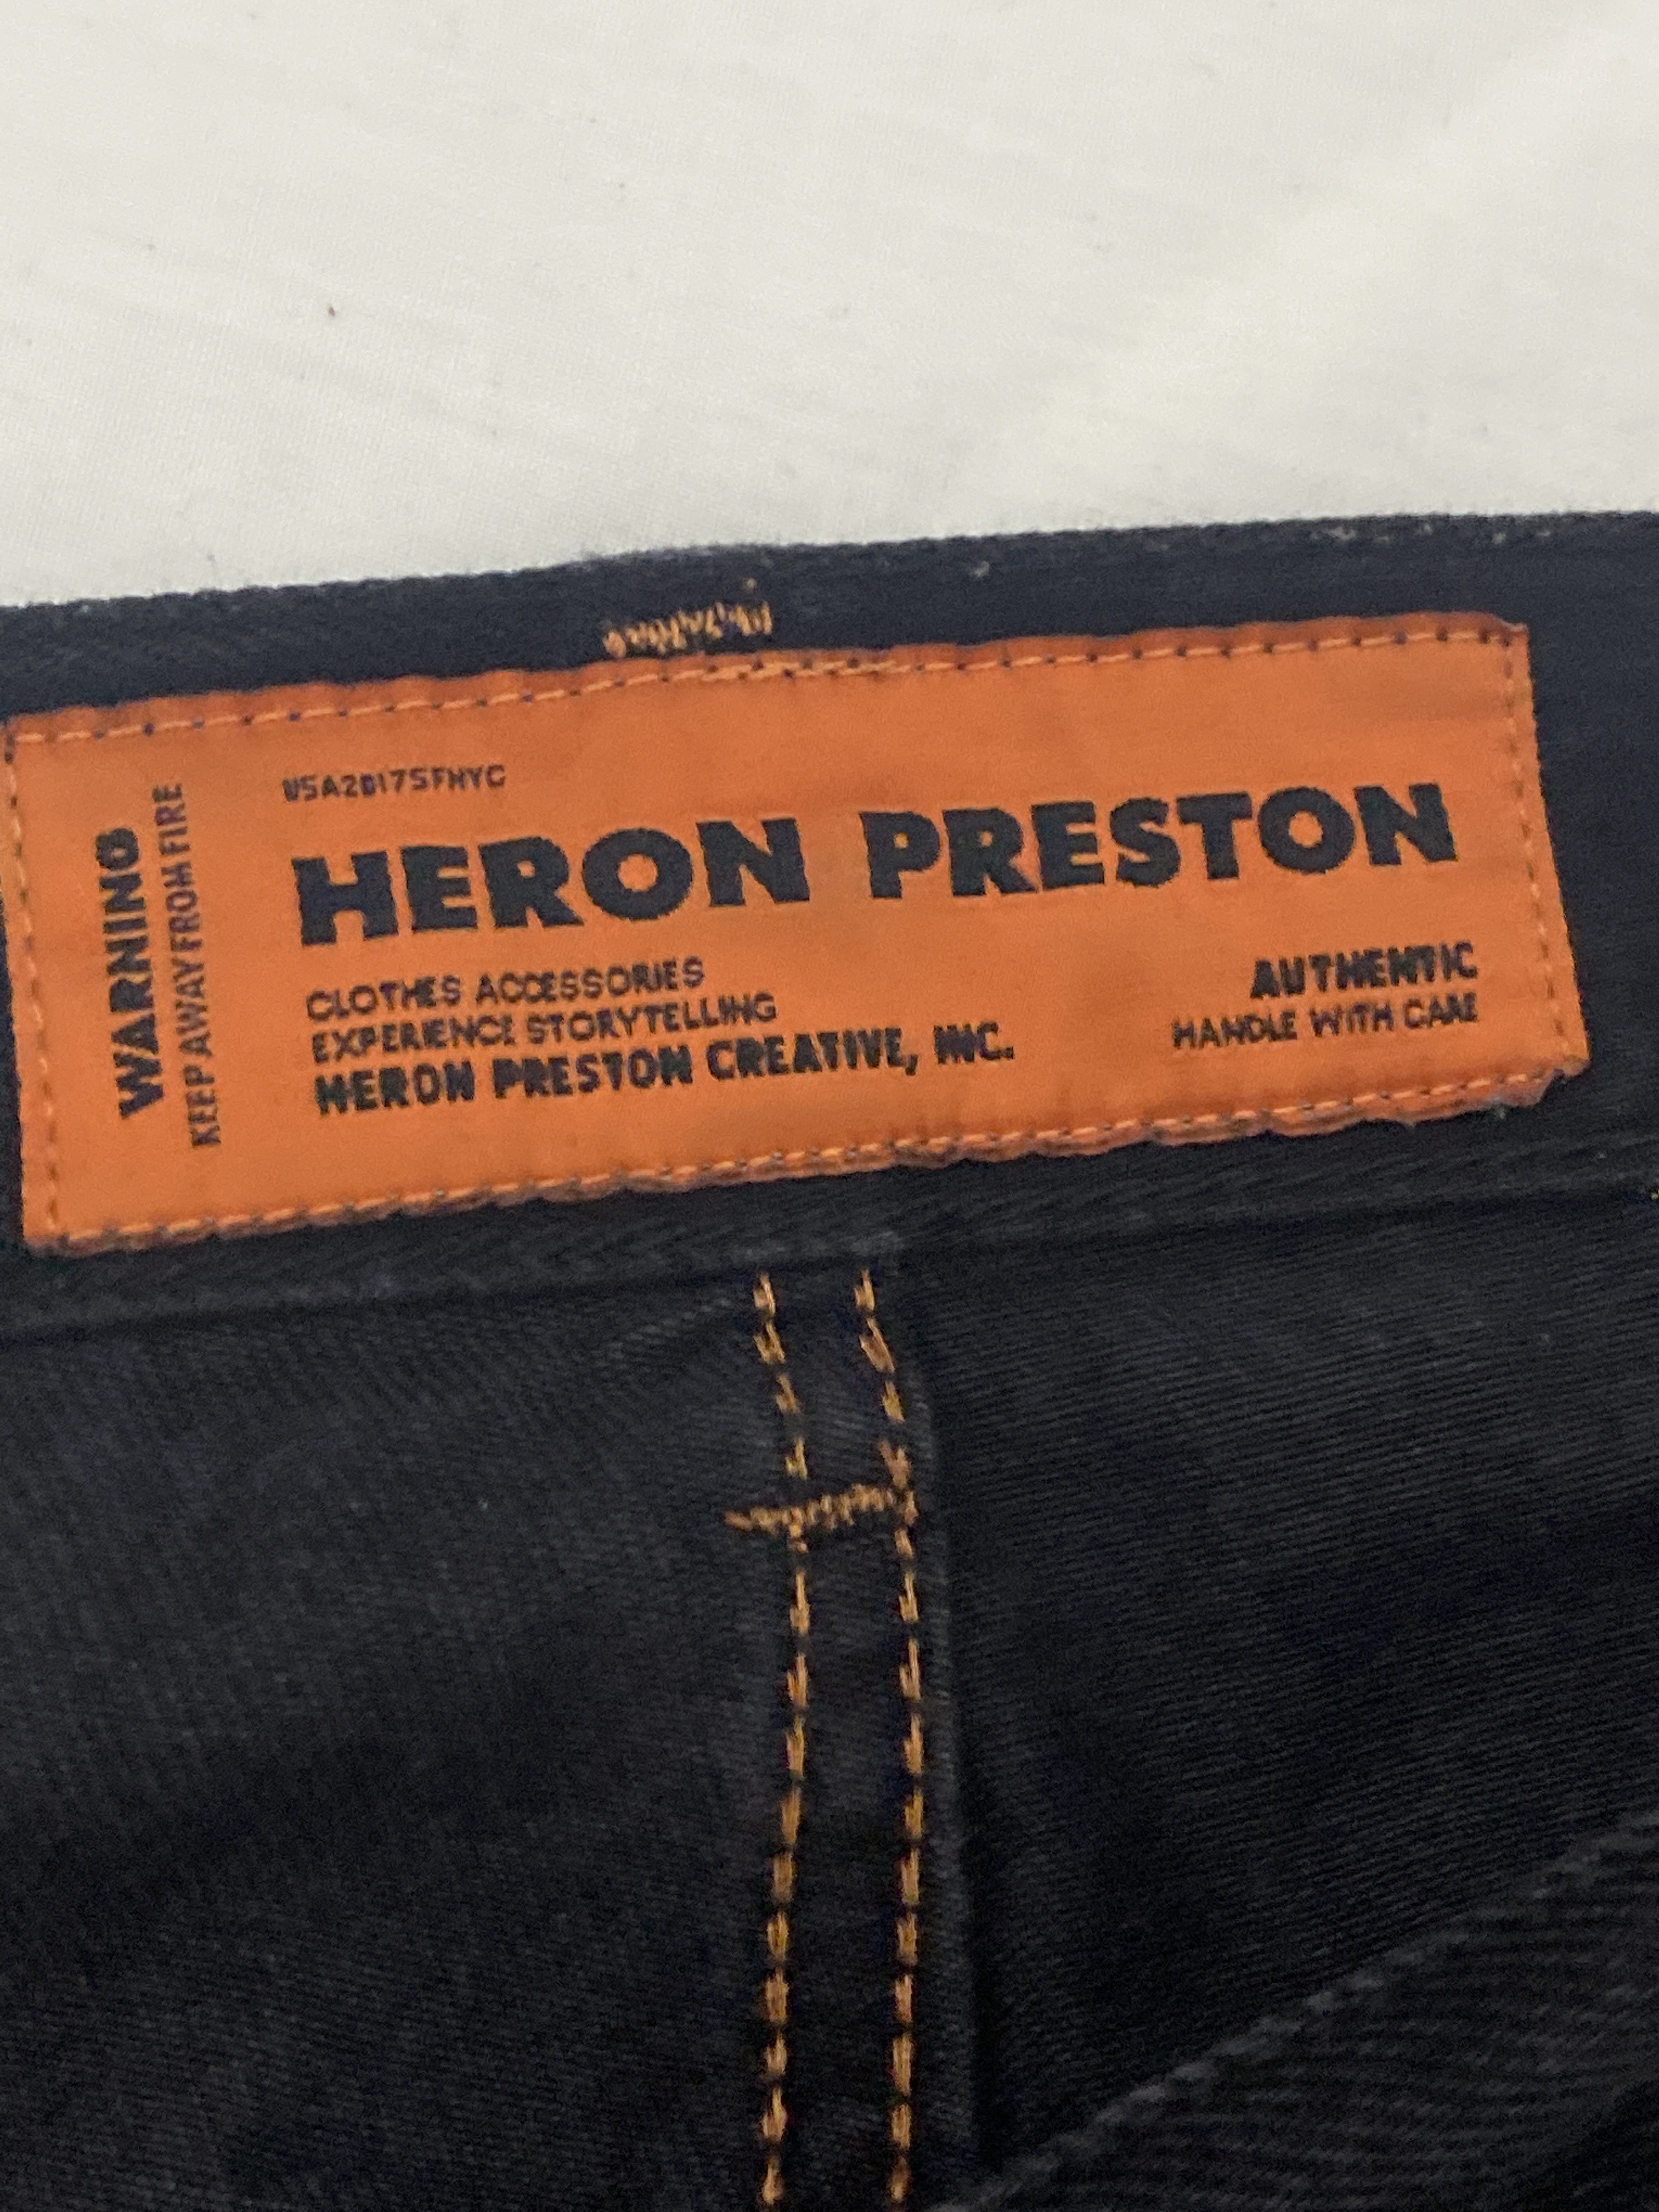 Heron preston style jeans - 2